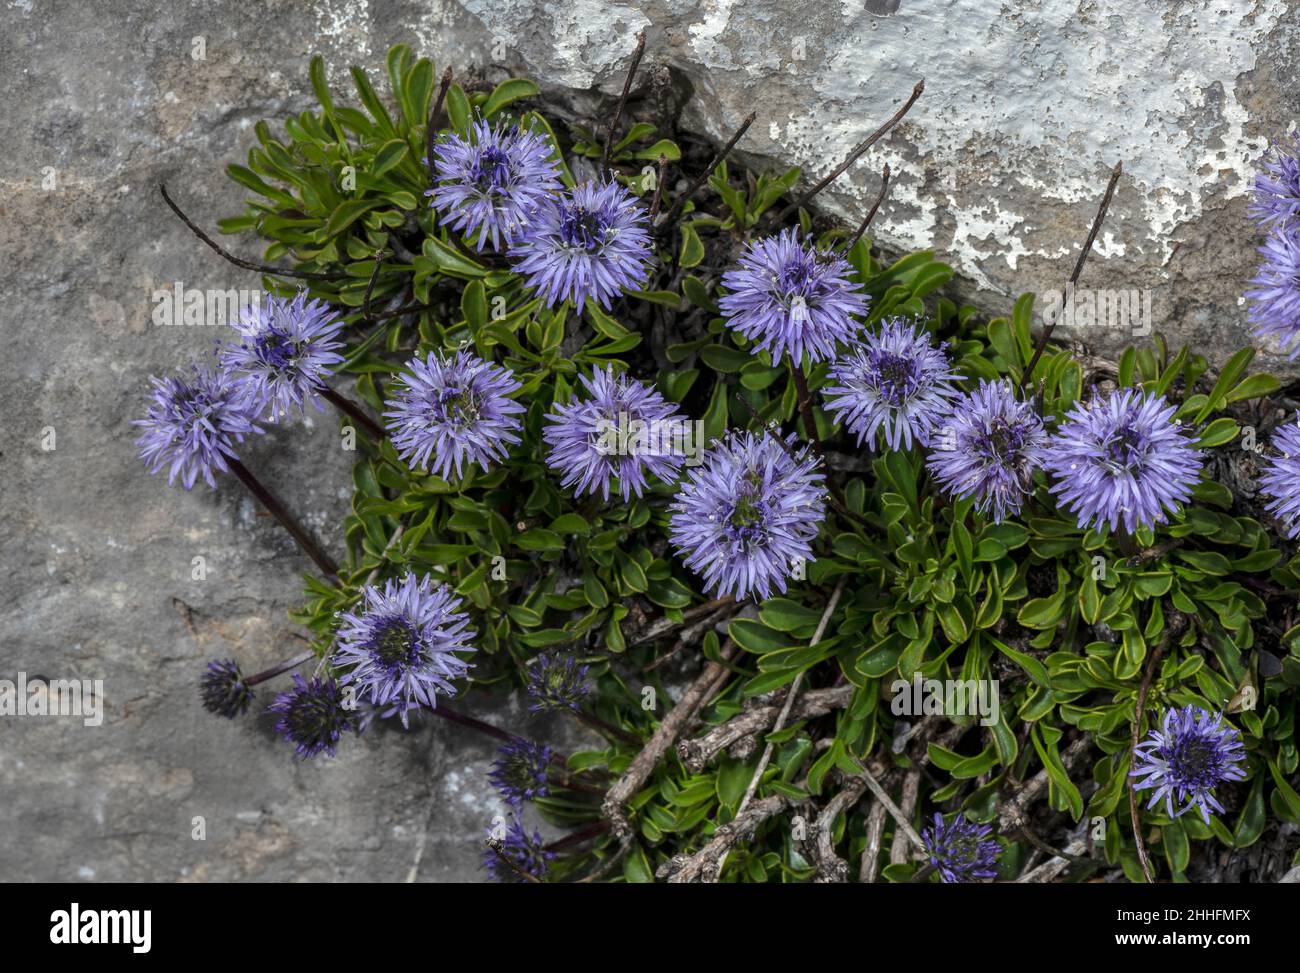 Matted Globularia, Globularia cordifolia in flower on limestone, Swiss Alps. Stock Photo